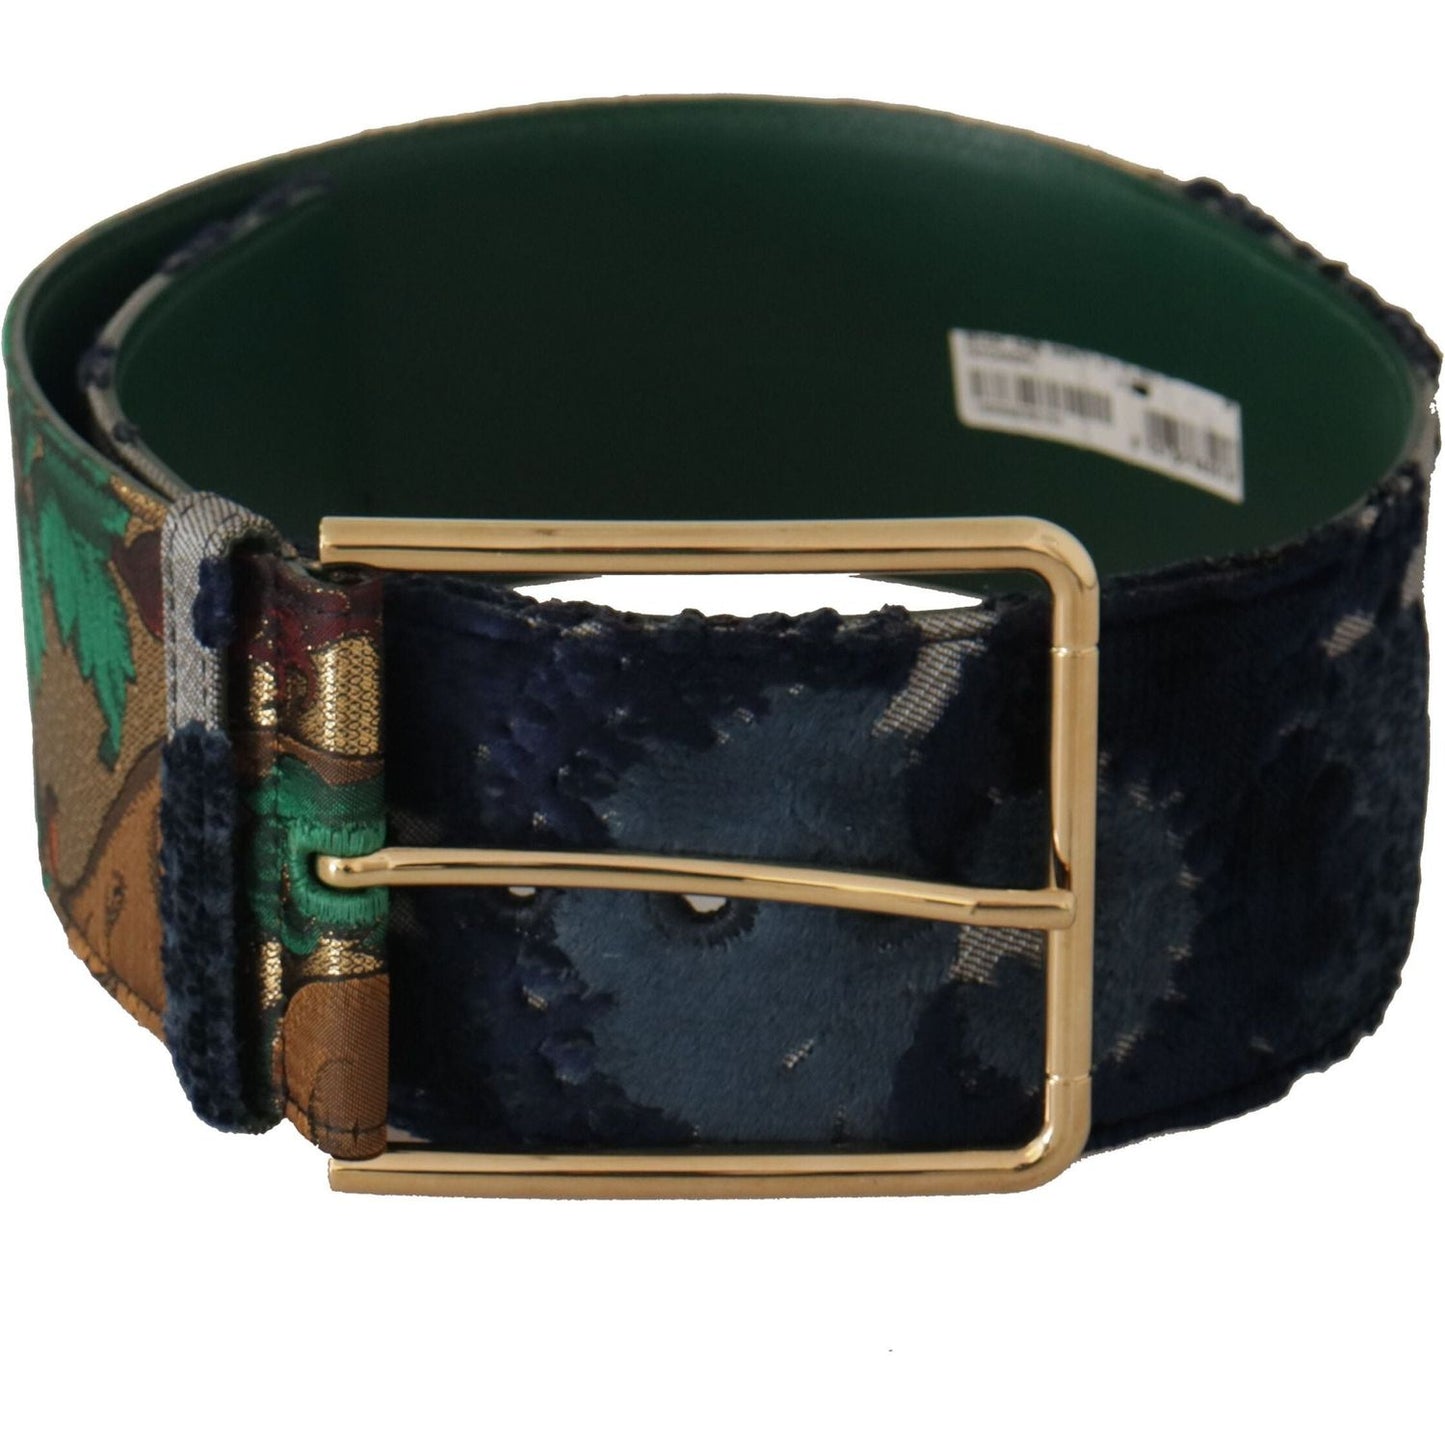 Dolce & Gabbana Elegant Green Leather Belt with Logo Buckle green-jacquard-embroid-leather-gold-metal-buckle-belt IMG_0916-2-scaled-dc39e440-808.jpg